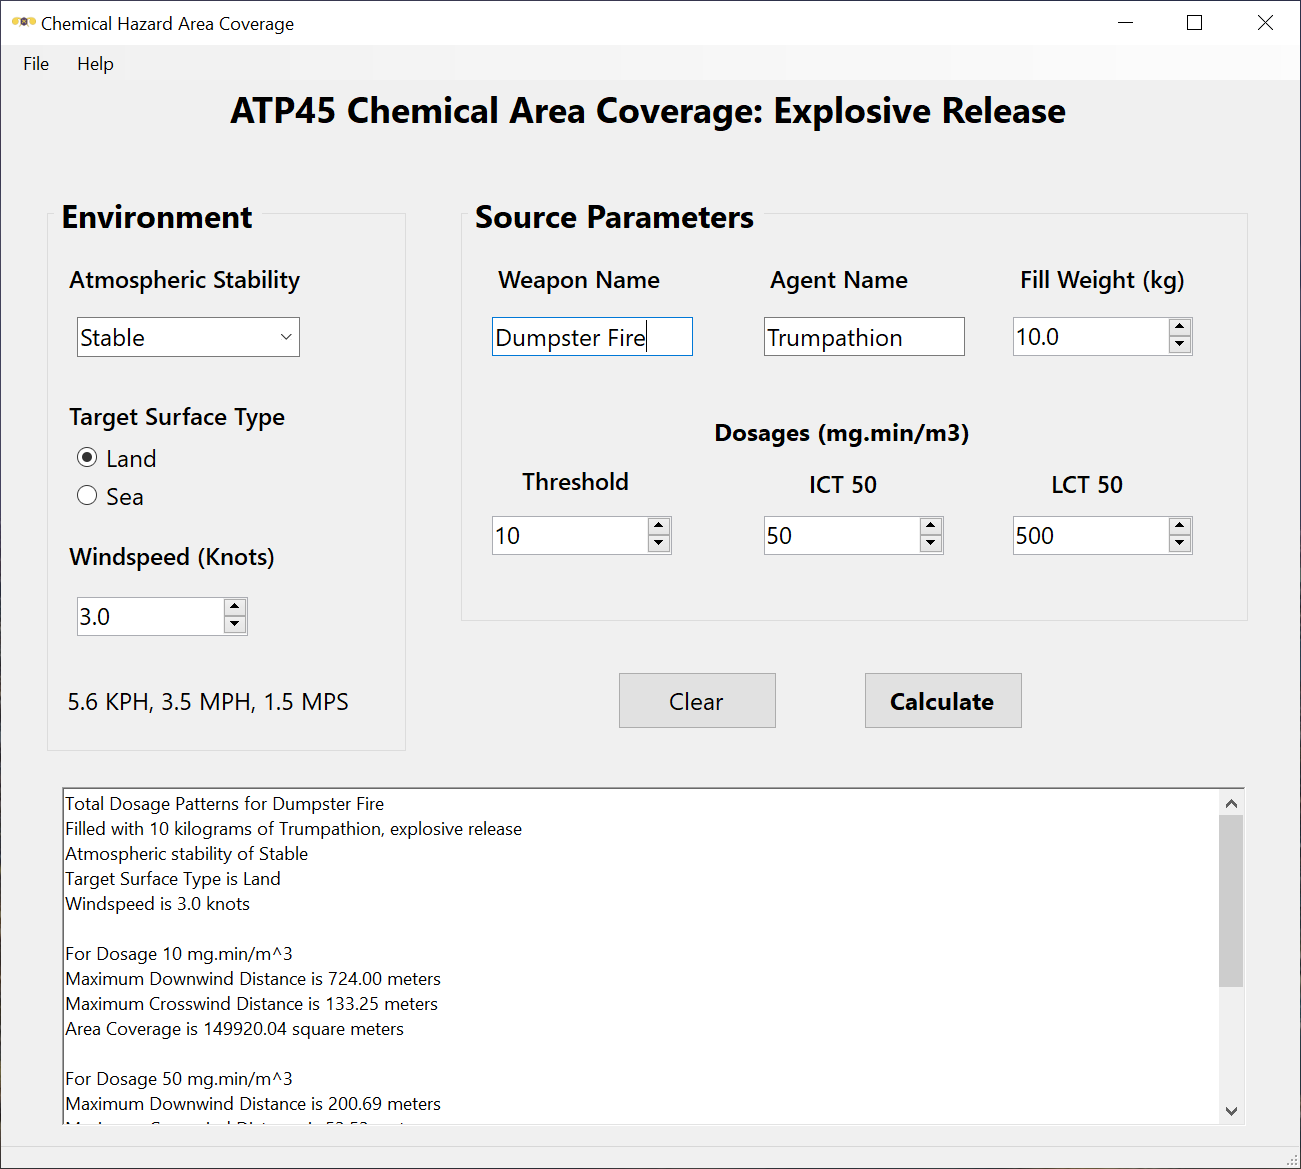 Chemical Hazard Area Coverage Calculator